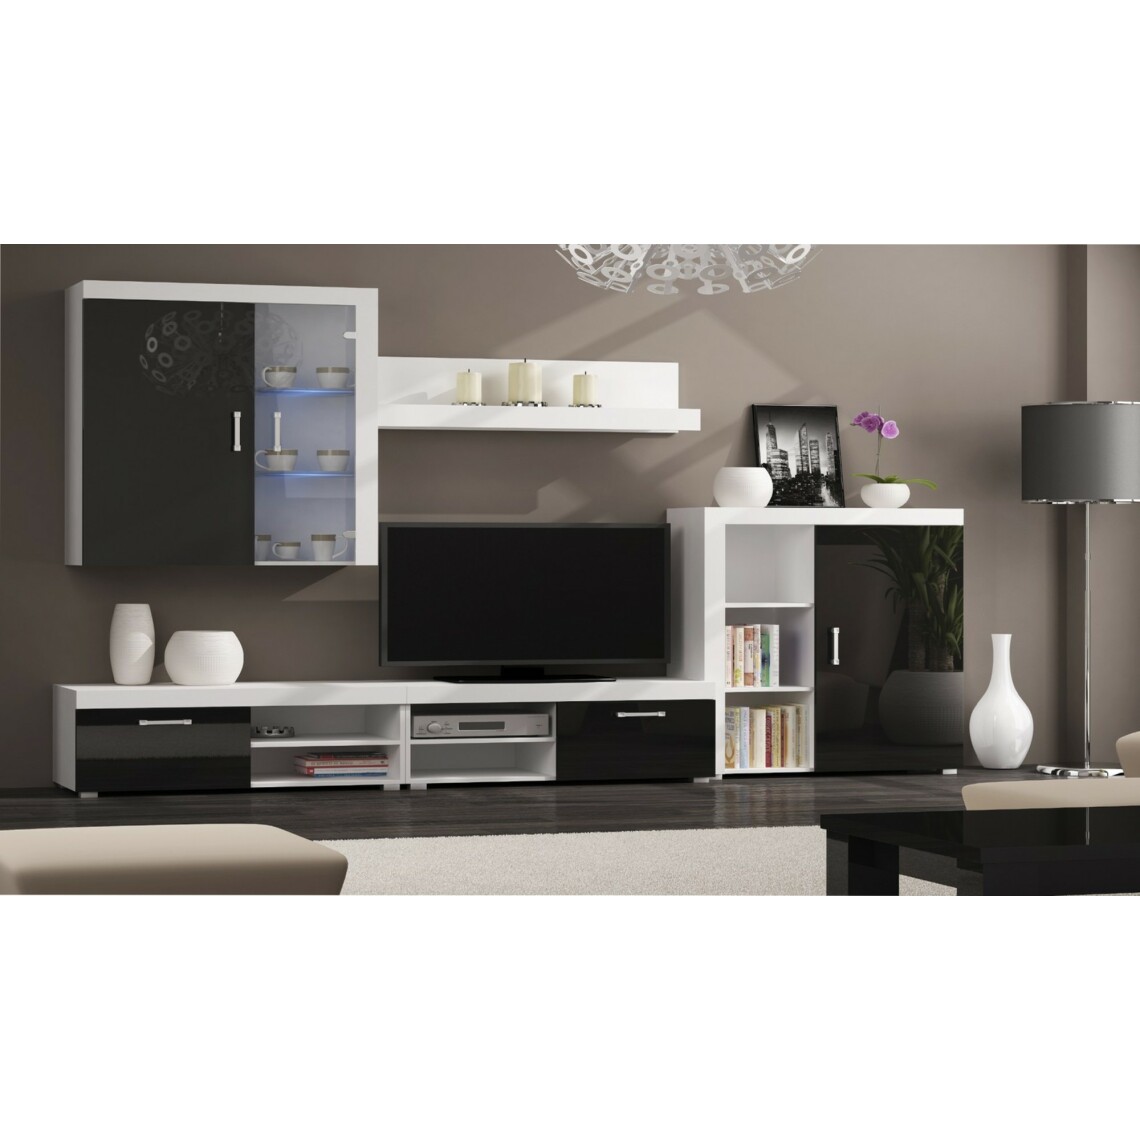 Skraut Home - Ensemble meubles, Noir Laqué-Blanc Mat.290x200x45cm - Meubles TV, Hi-Fi